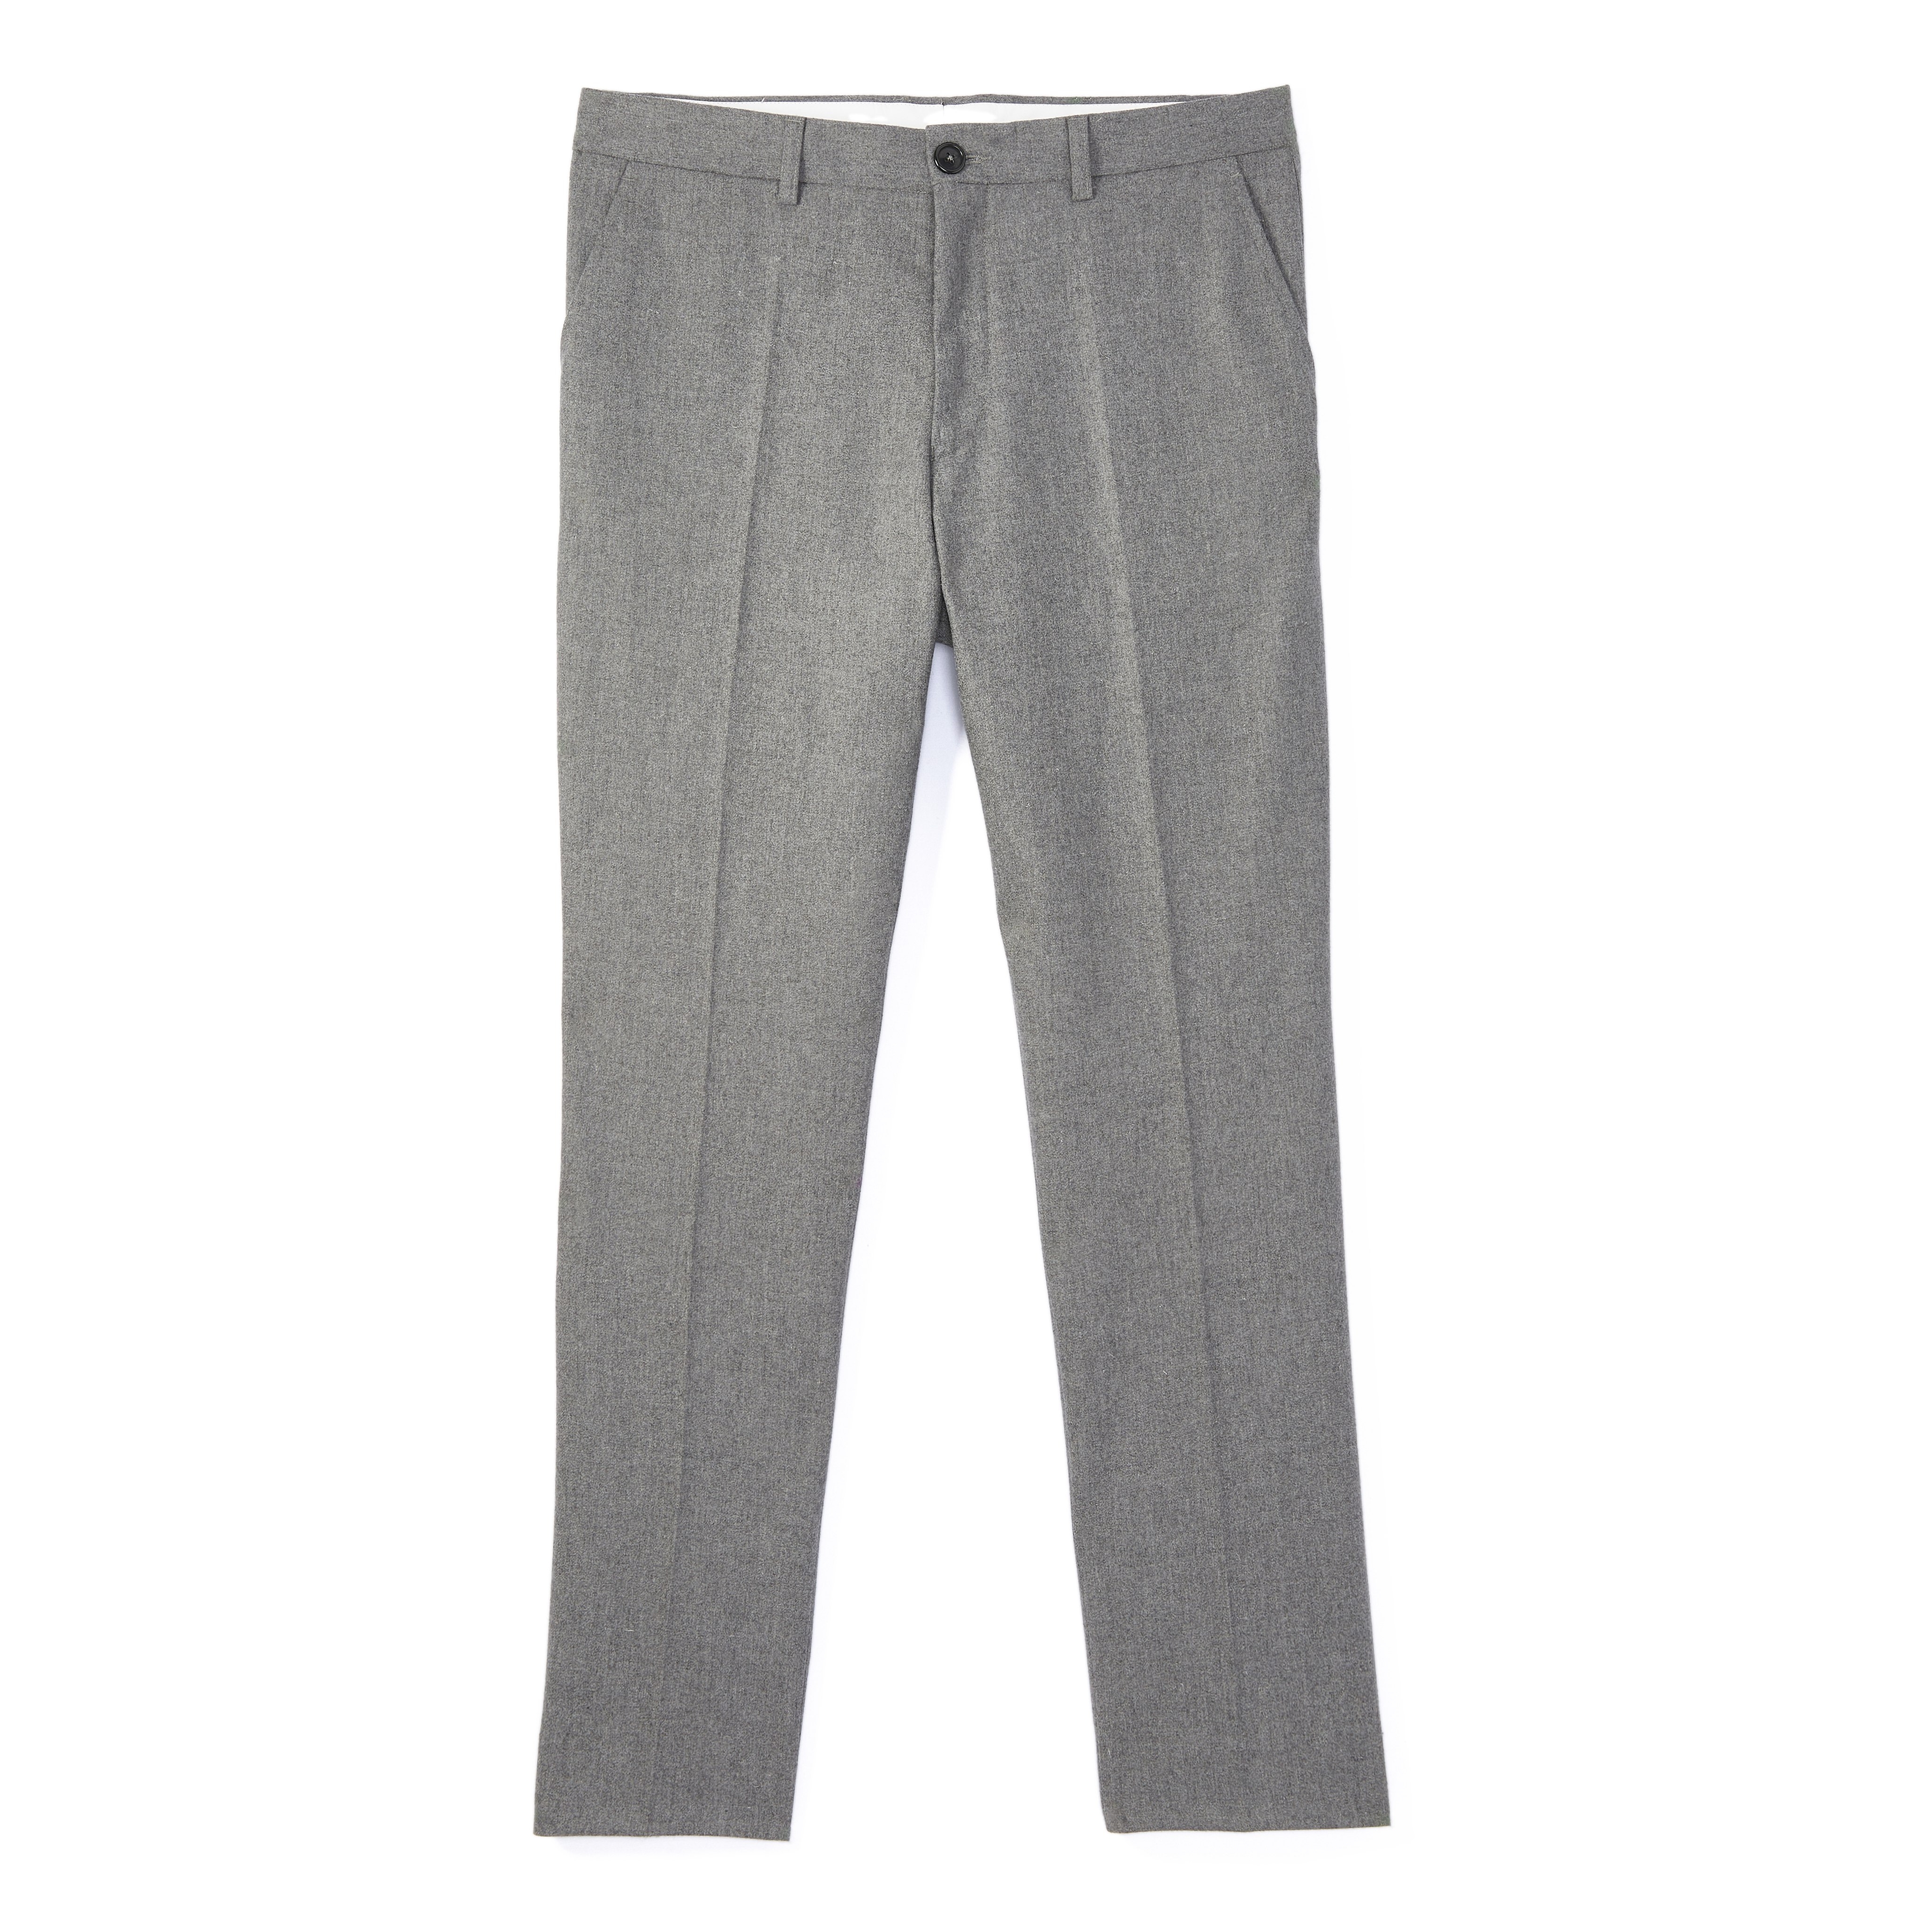 High School Grey Trouser - Lowes Menswear